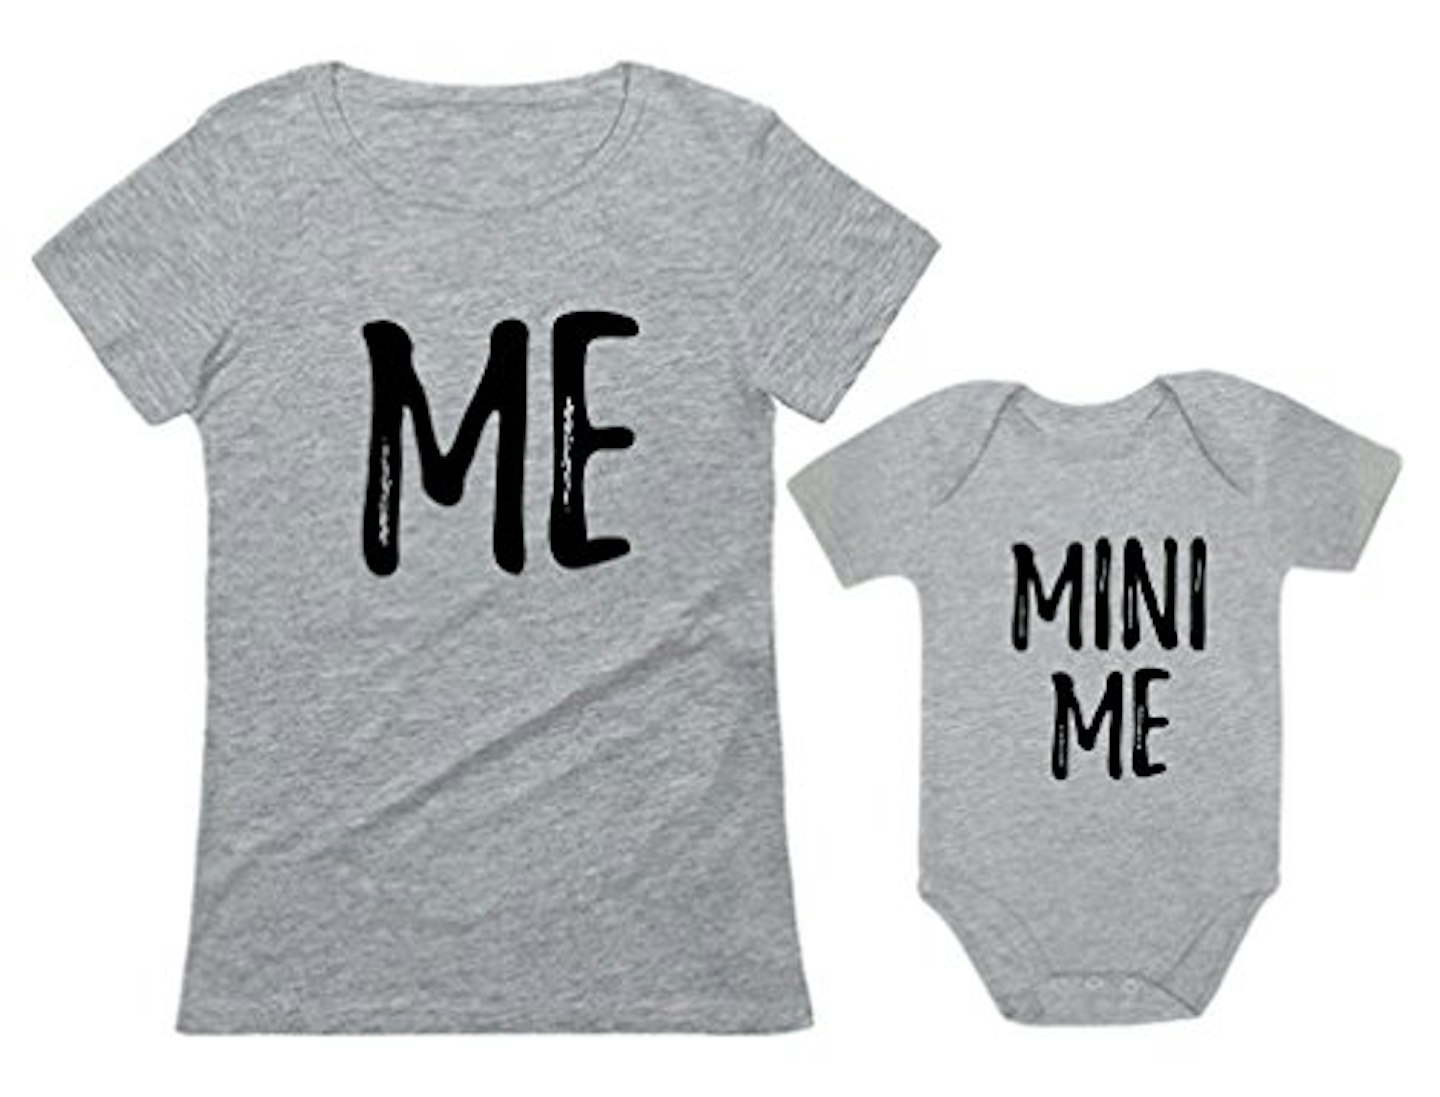 Me and Mini Me Set with 2 T-shirts